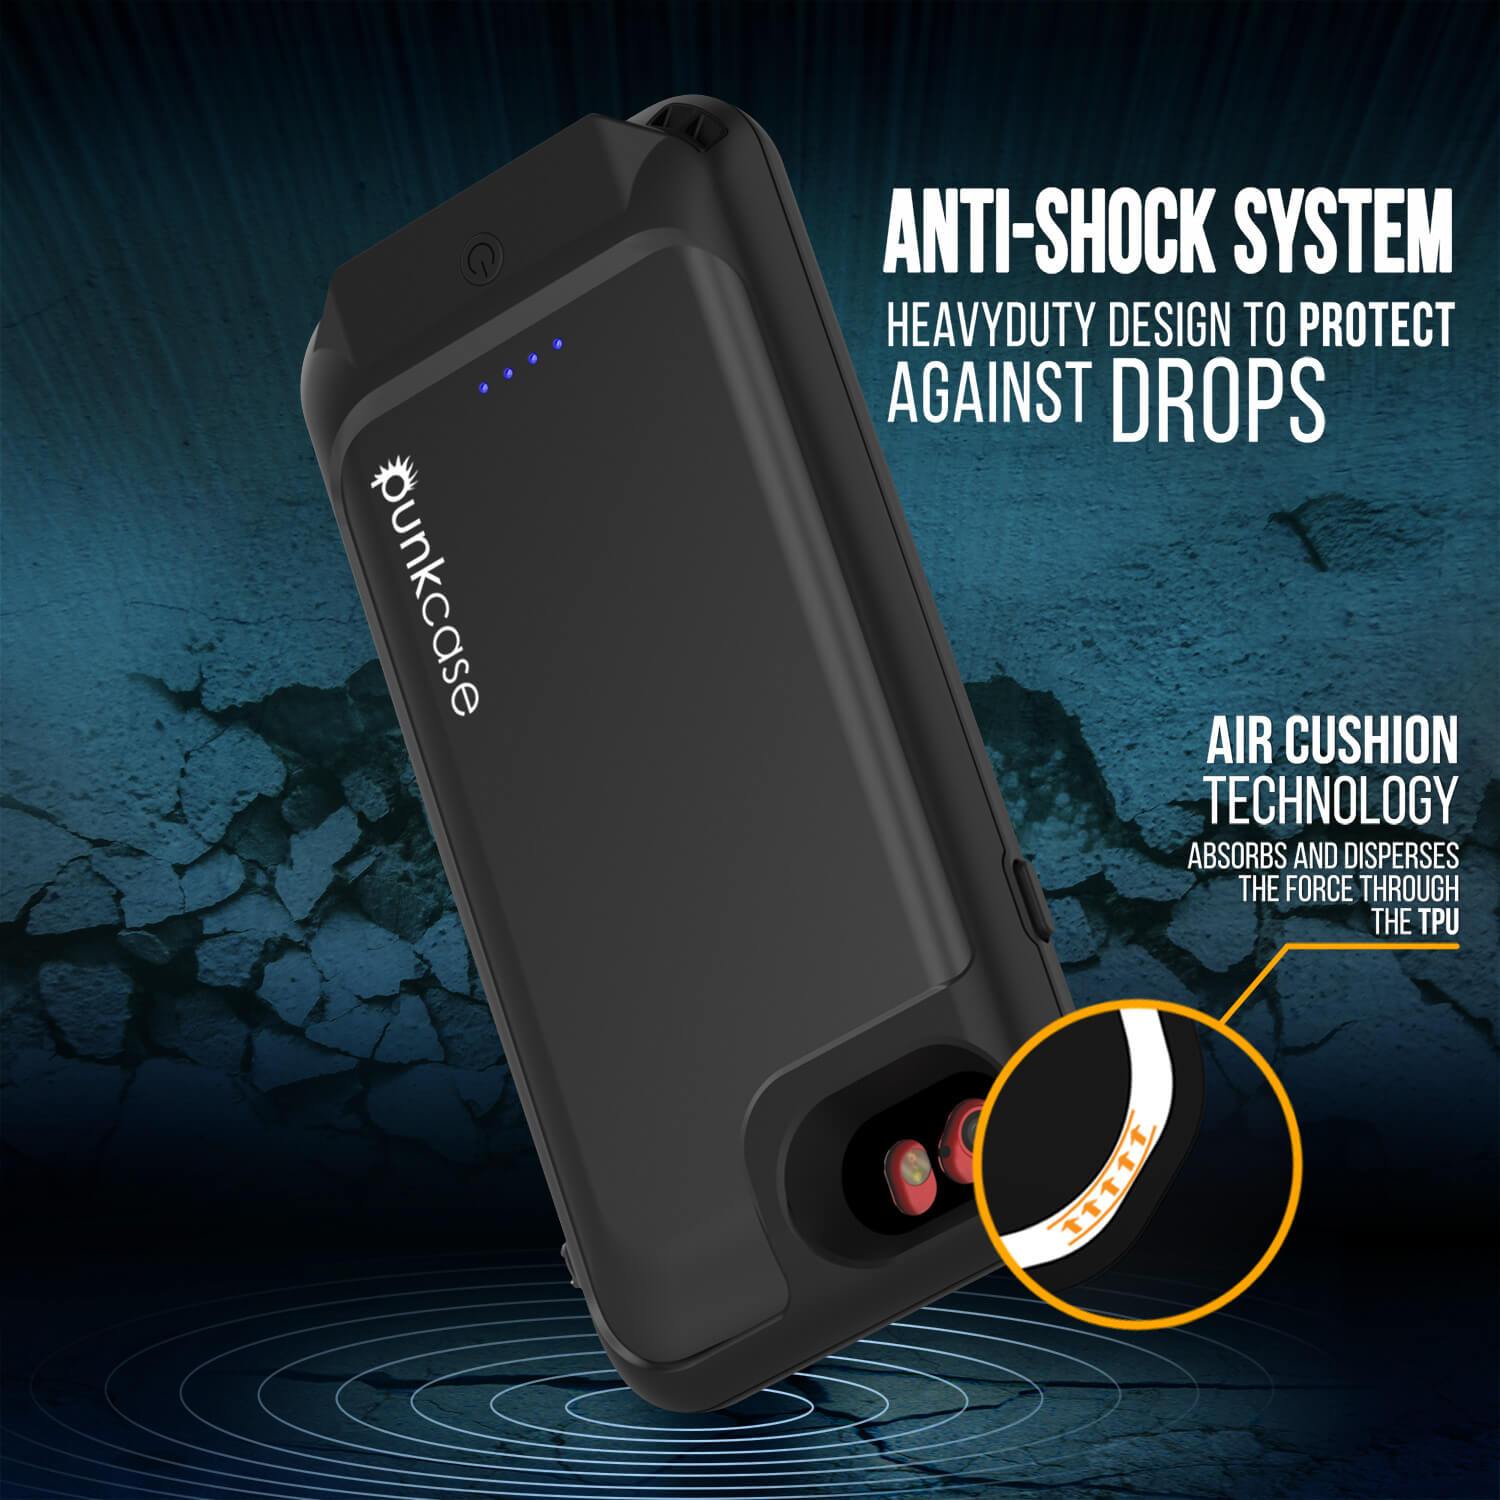 iPhone 6/6s Battery Case PunkJuice  - Waterproof Slim Portable Power Juice Bank with 2750mAh High Capacity (Jet Black)